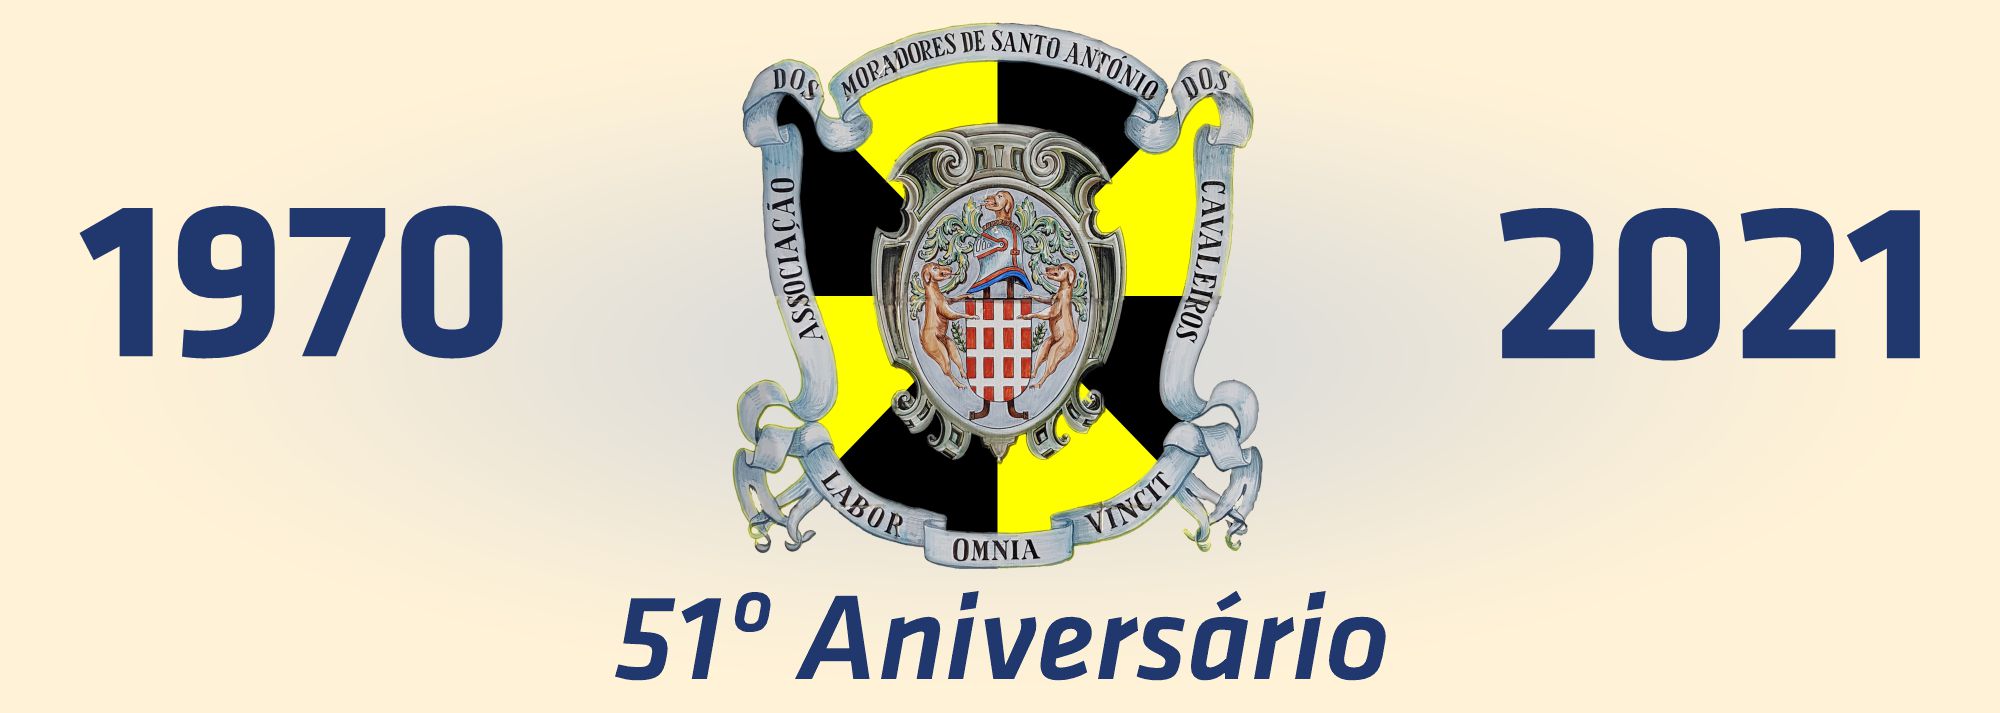 51º aniversário AMSAC